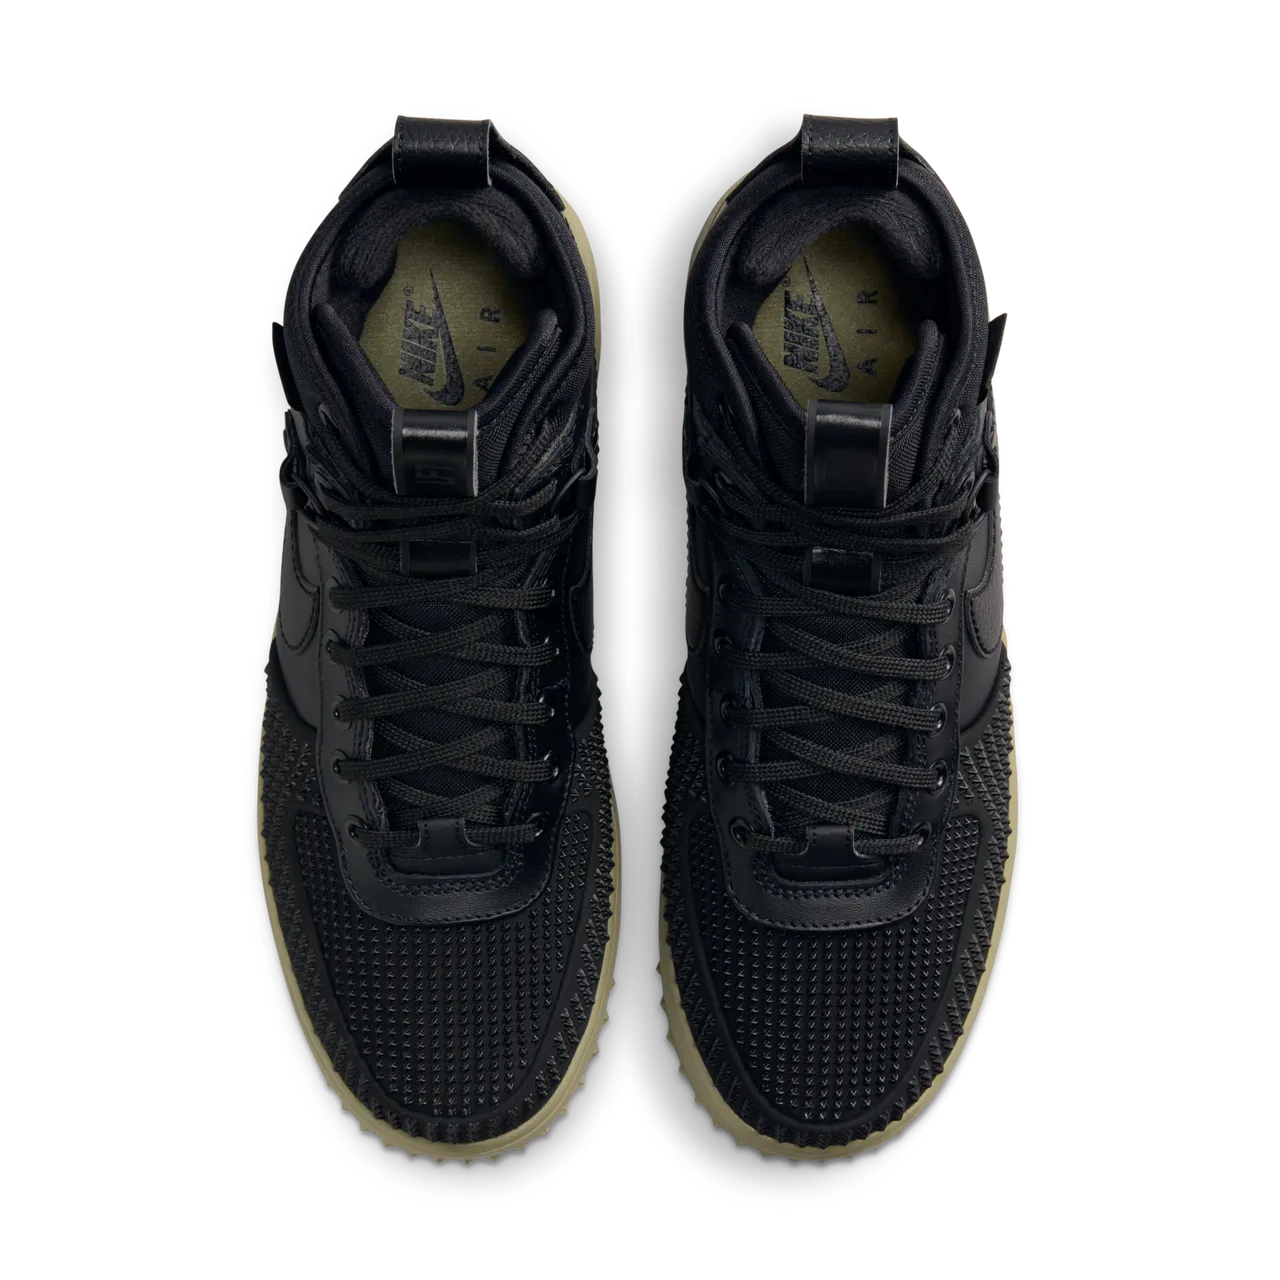 Nike Lunar Force 1 Men's Duckboot - Black - Leather